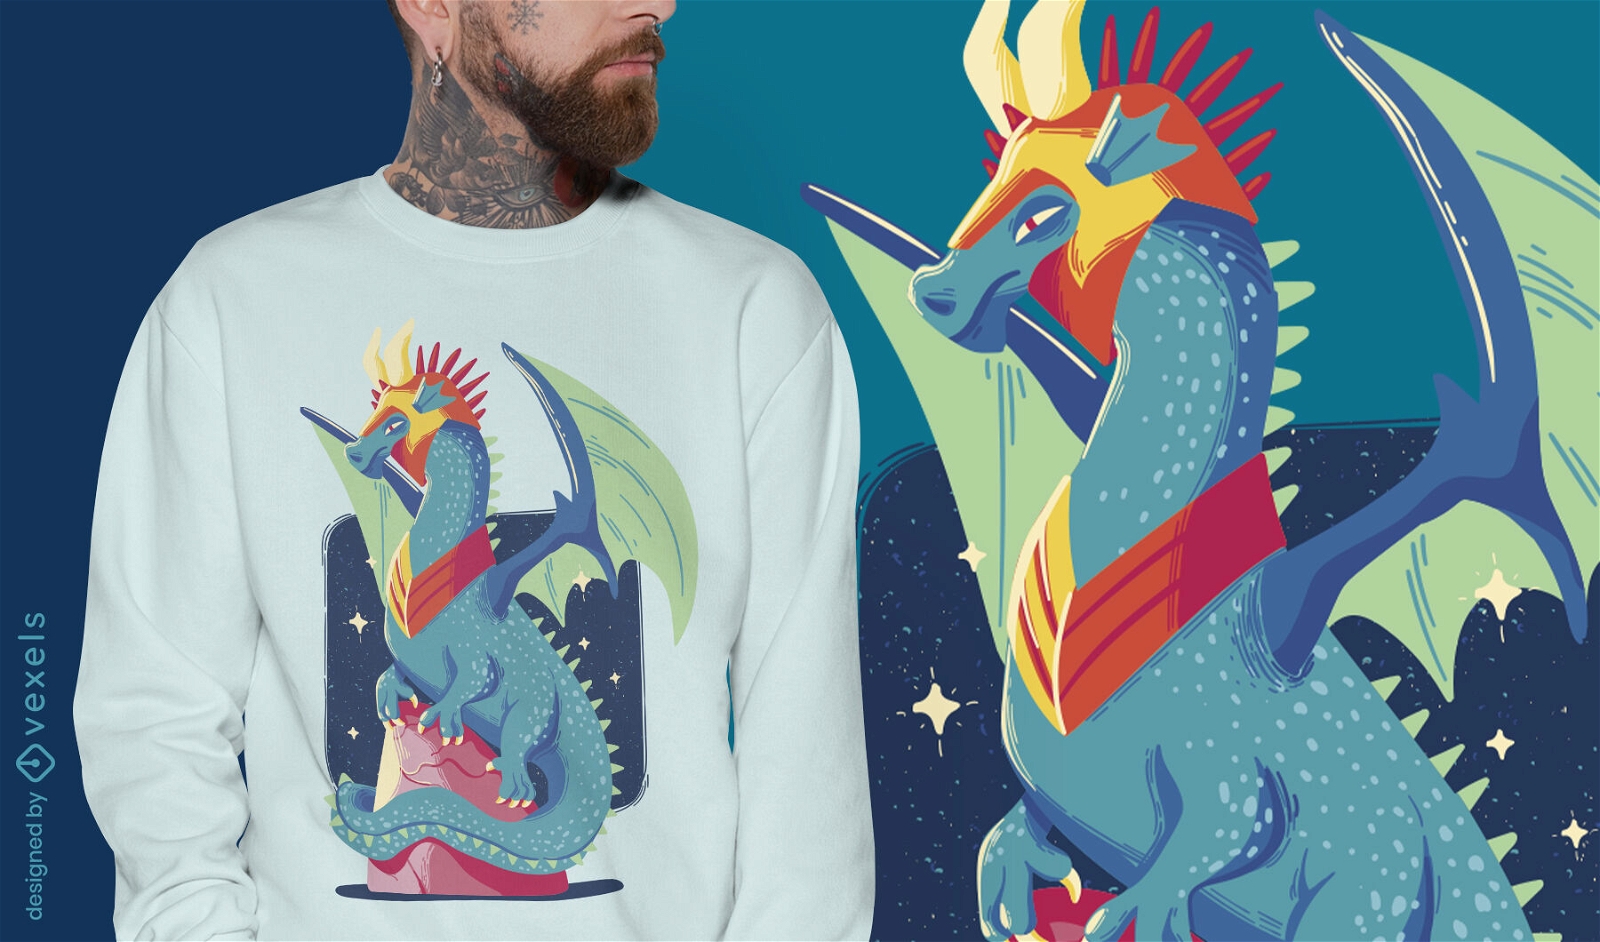 Fairytale dragon with helmet t-shirt design